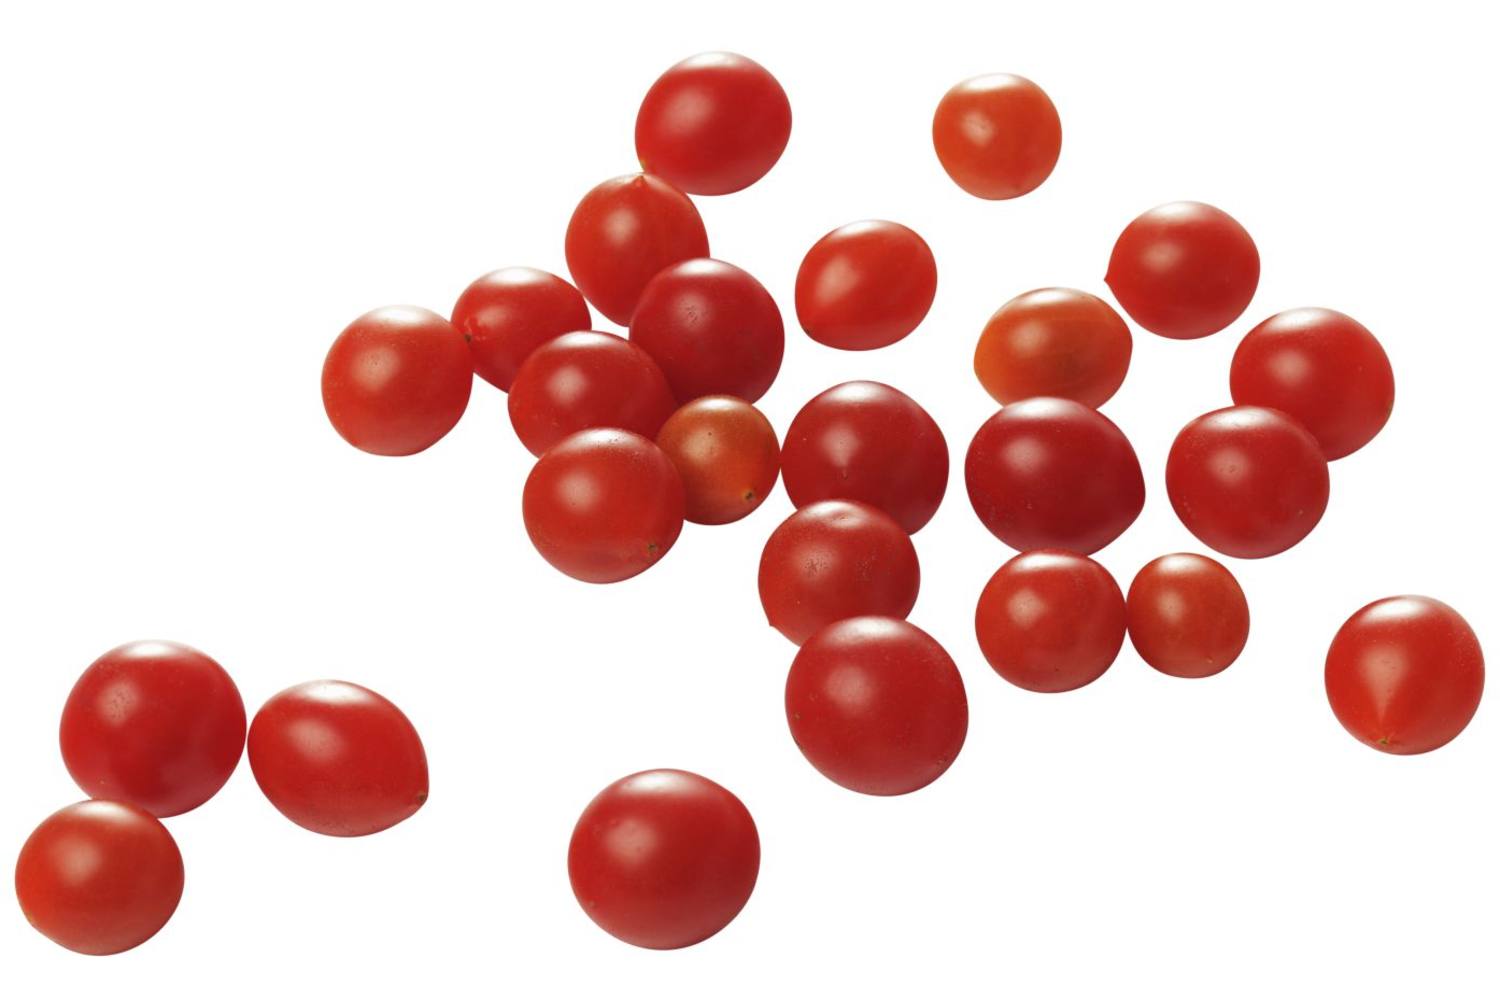 Tomberry tomaatjes rood 125gr stuk 1